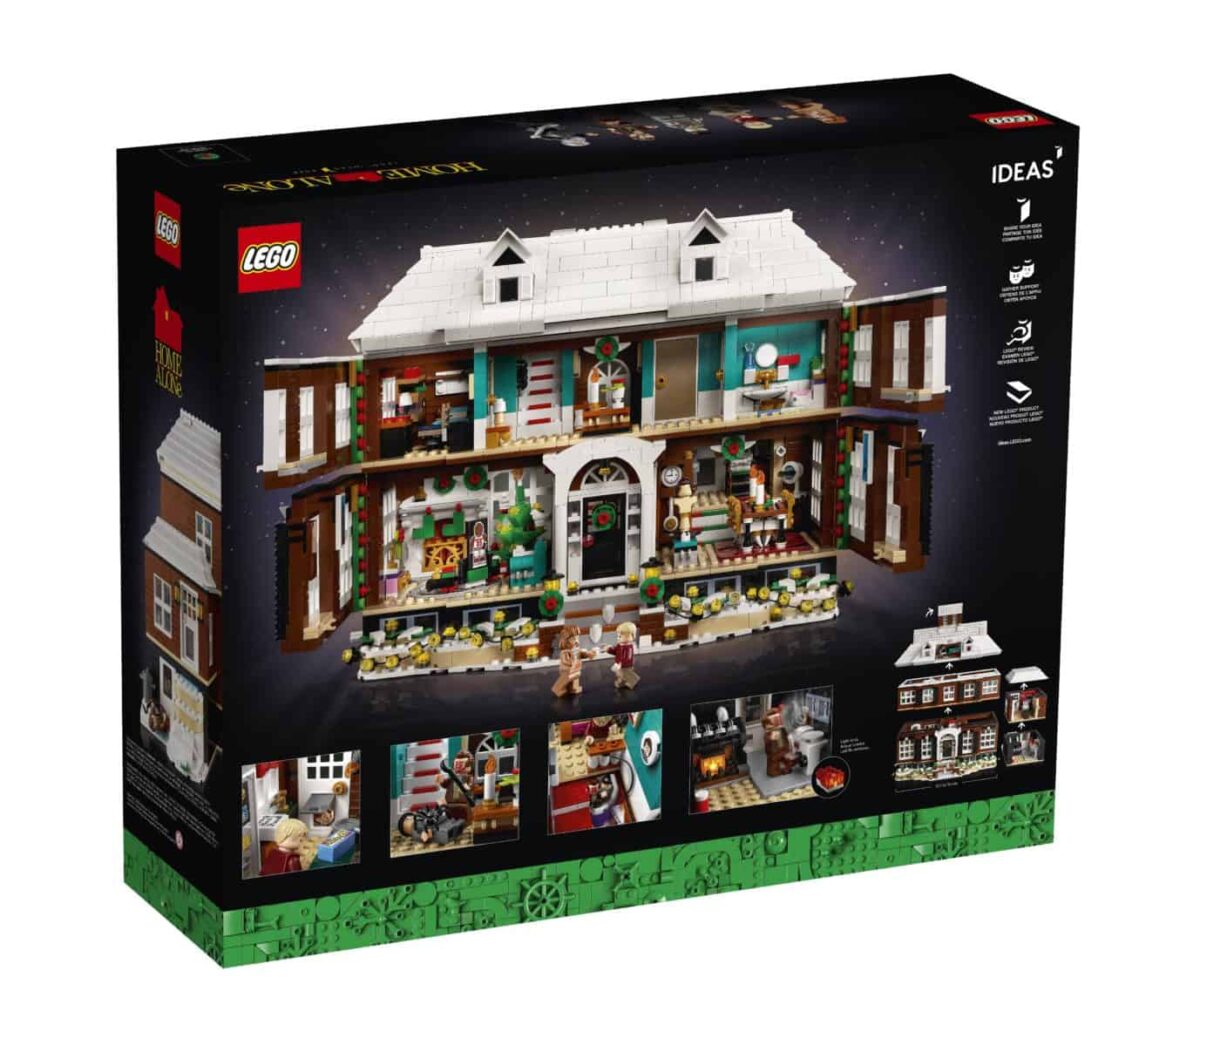 LEGO 21330 Home Alone Box Back 1400x1192 1